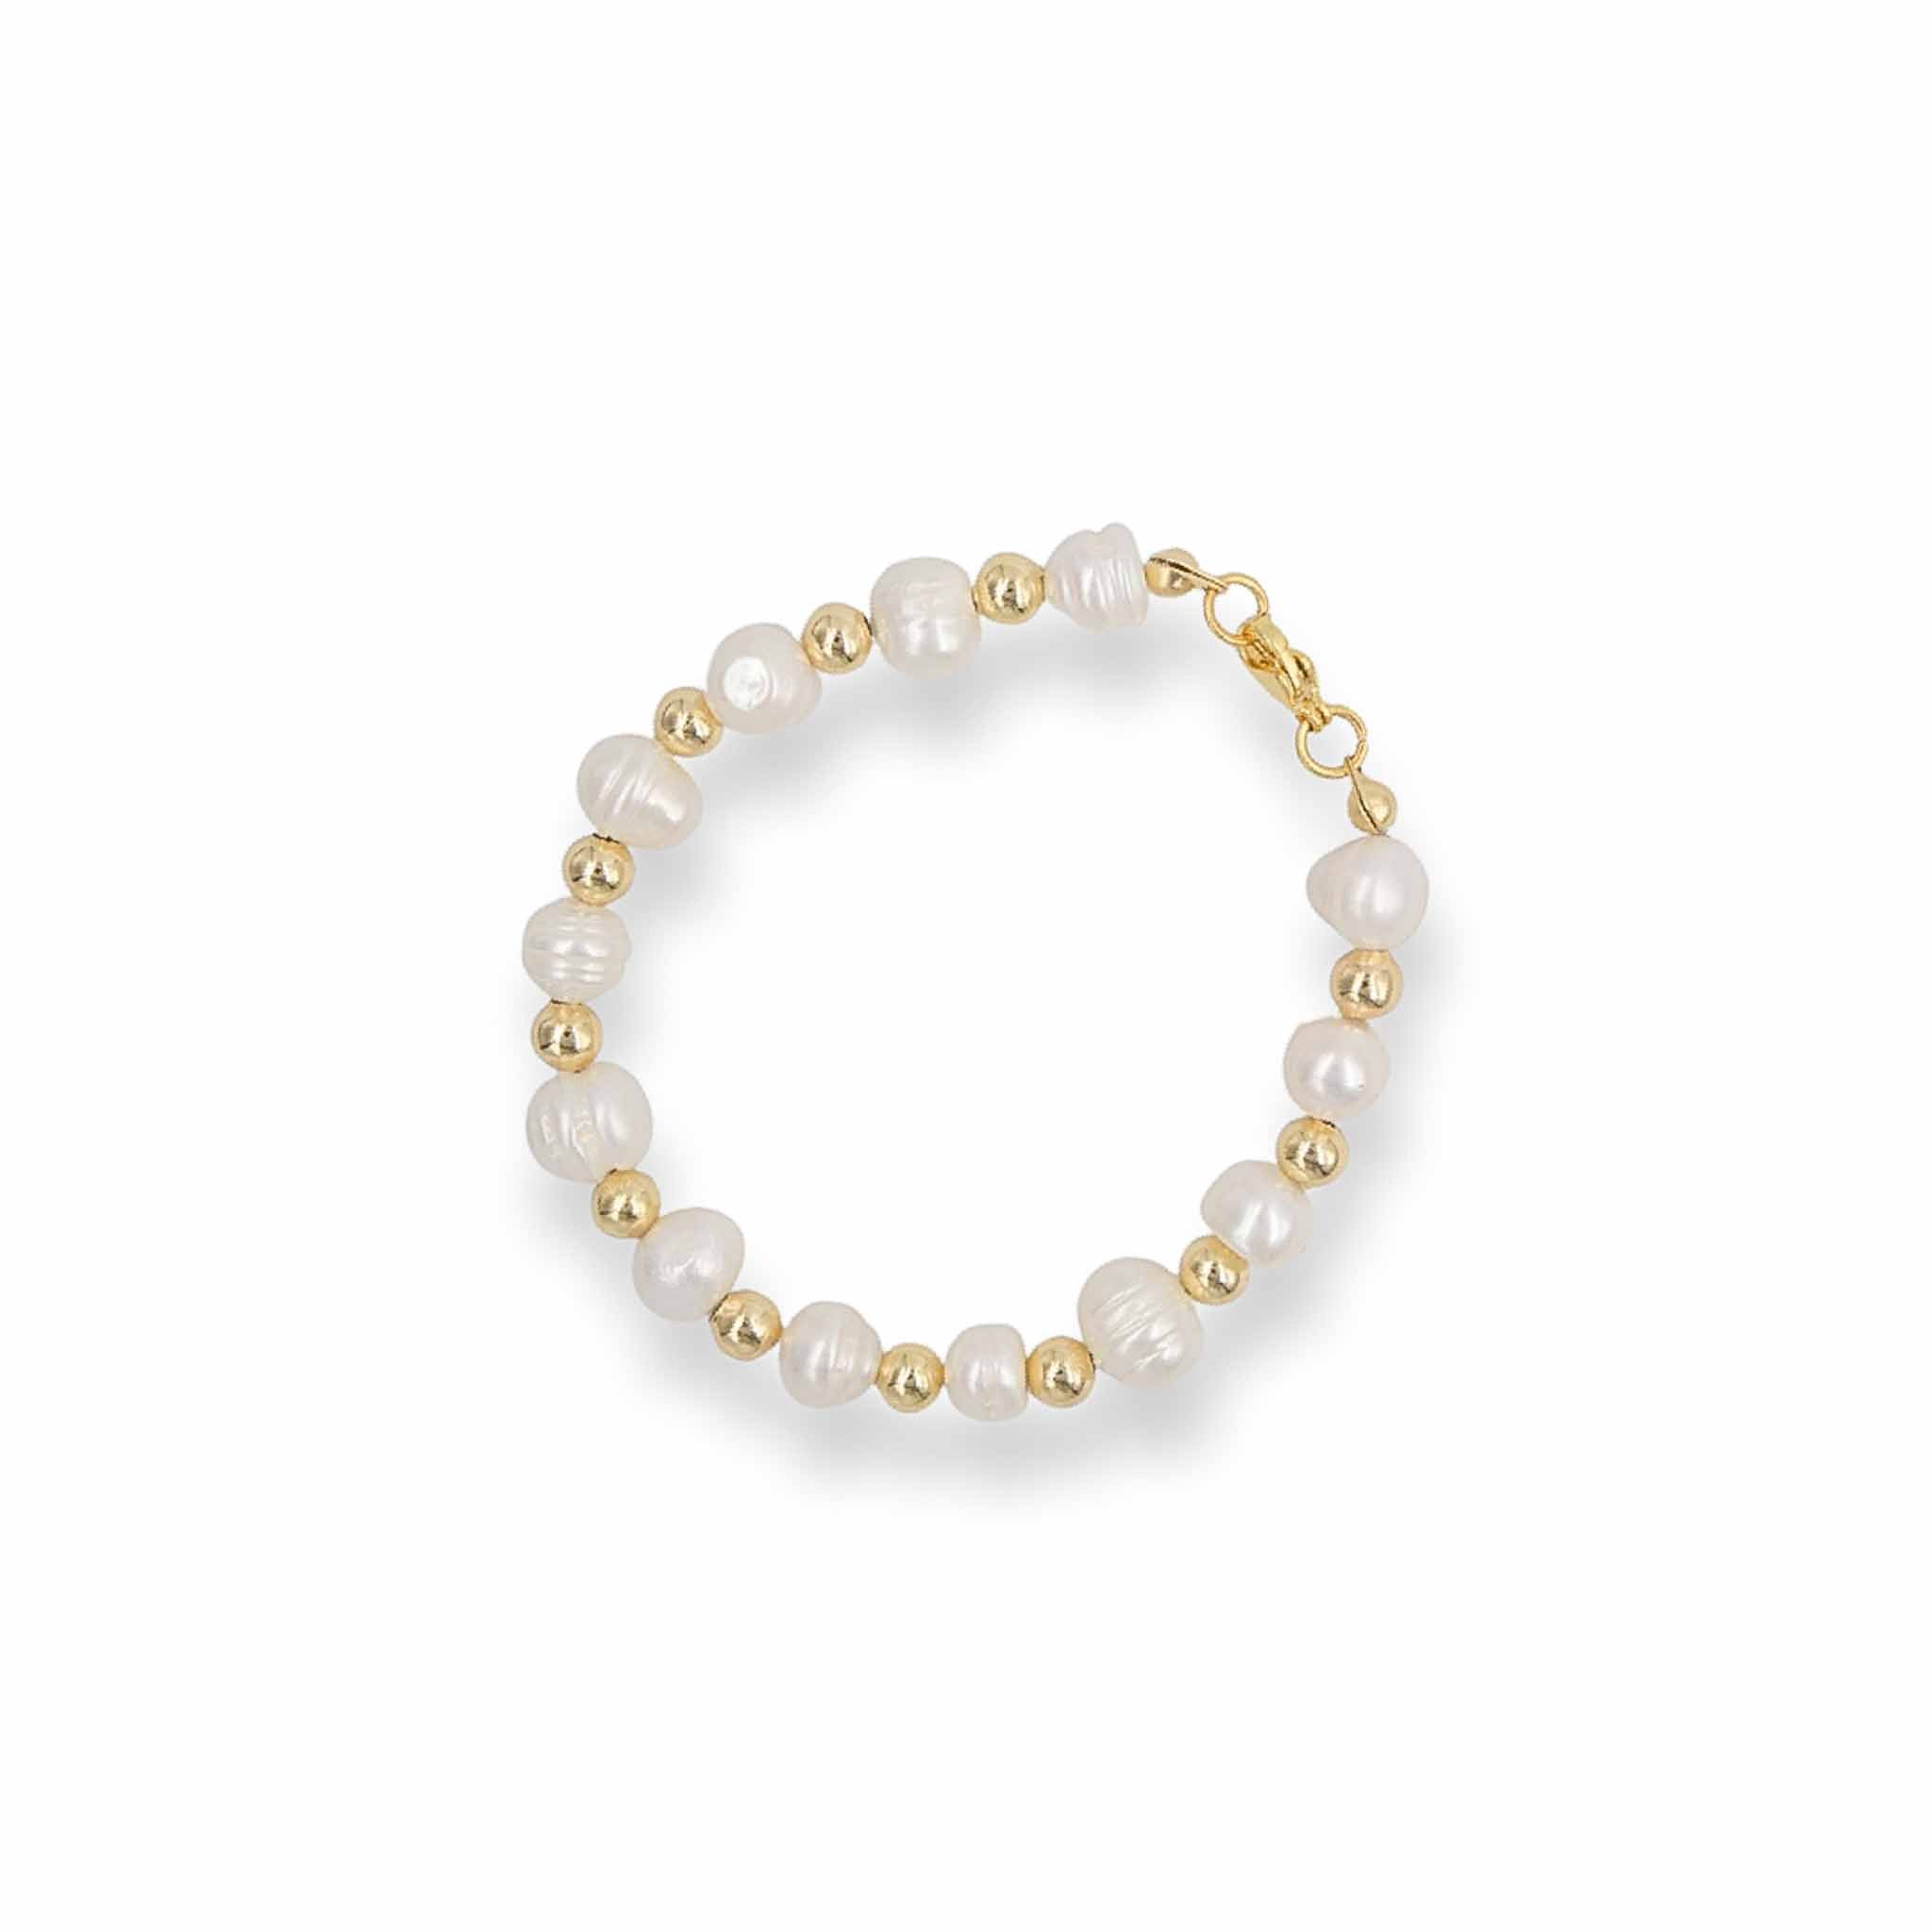 Dolce Vita Bracelet - Freshwater Pearls - Epico Designs 